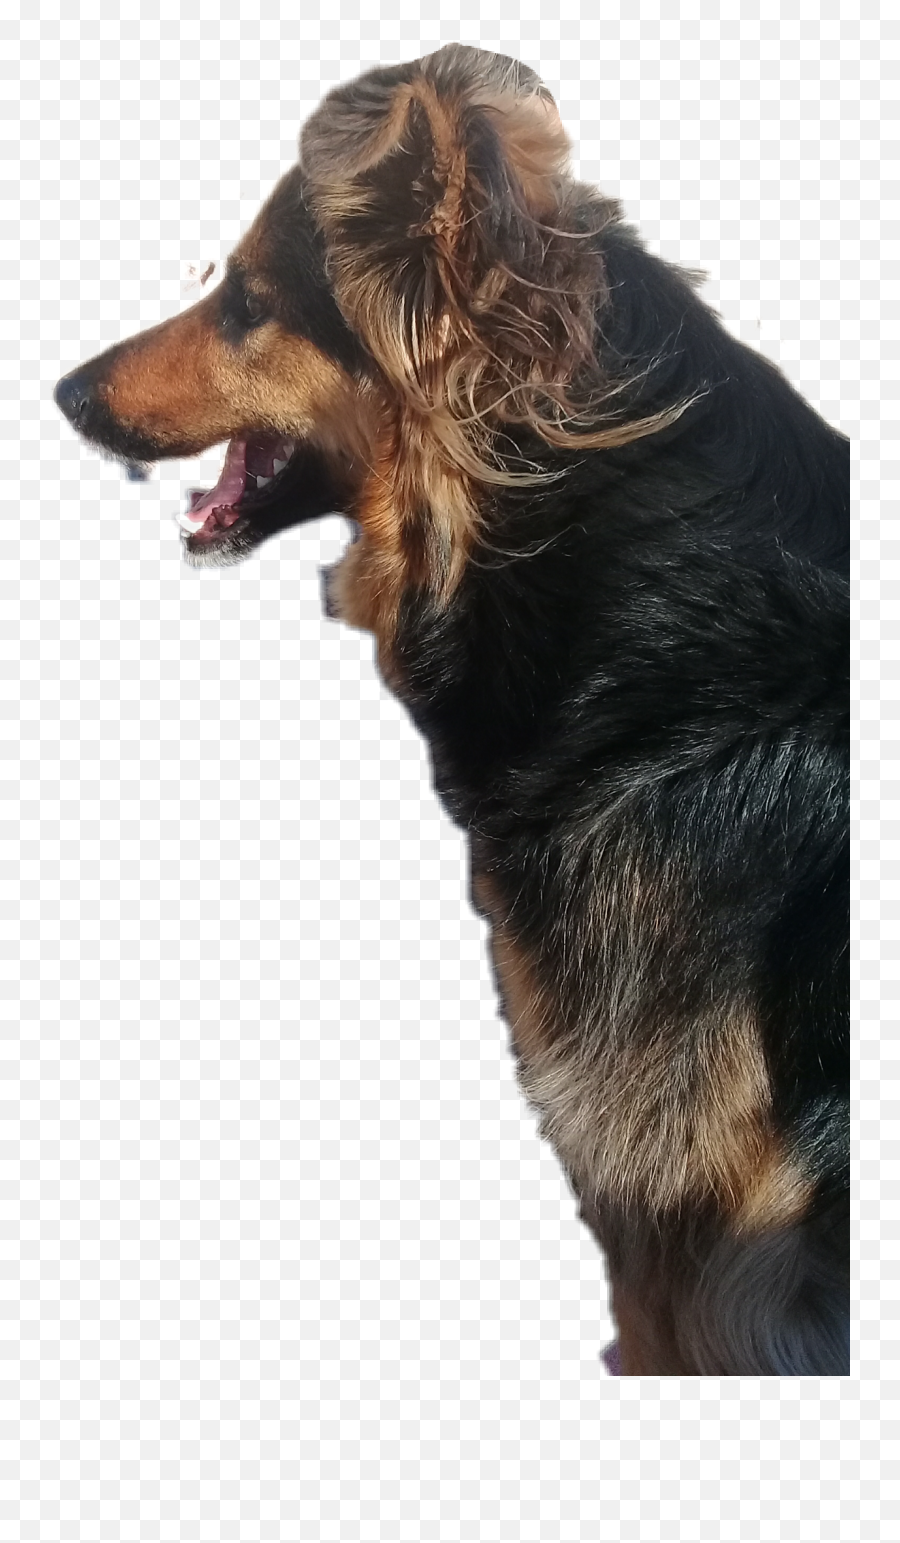 The Most Edited Mechiyflor Picsart - Vulnerable Native Breeds Emoji,German Shepherd Emoji Android